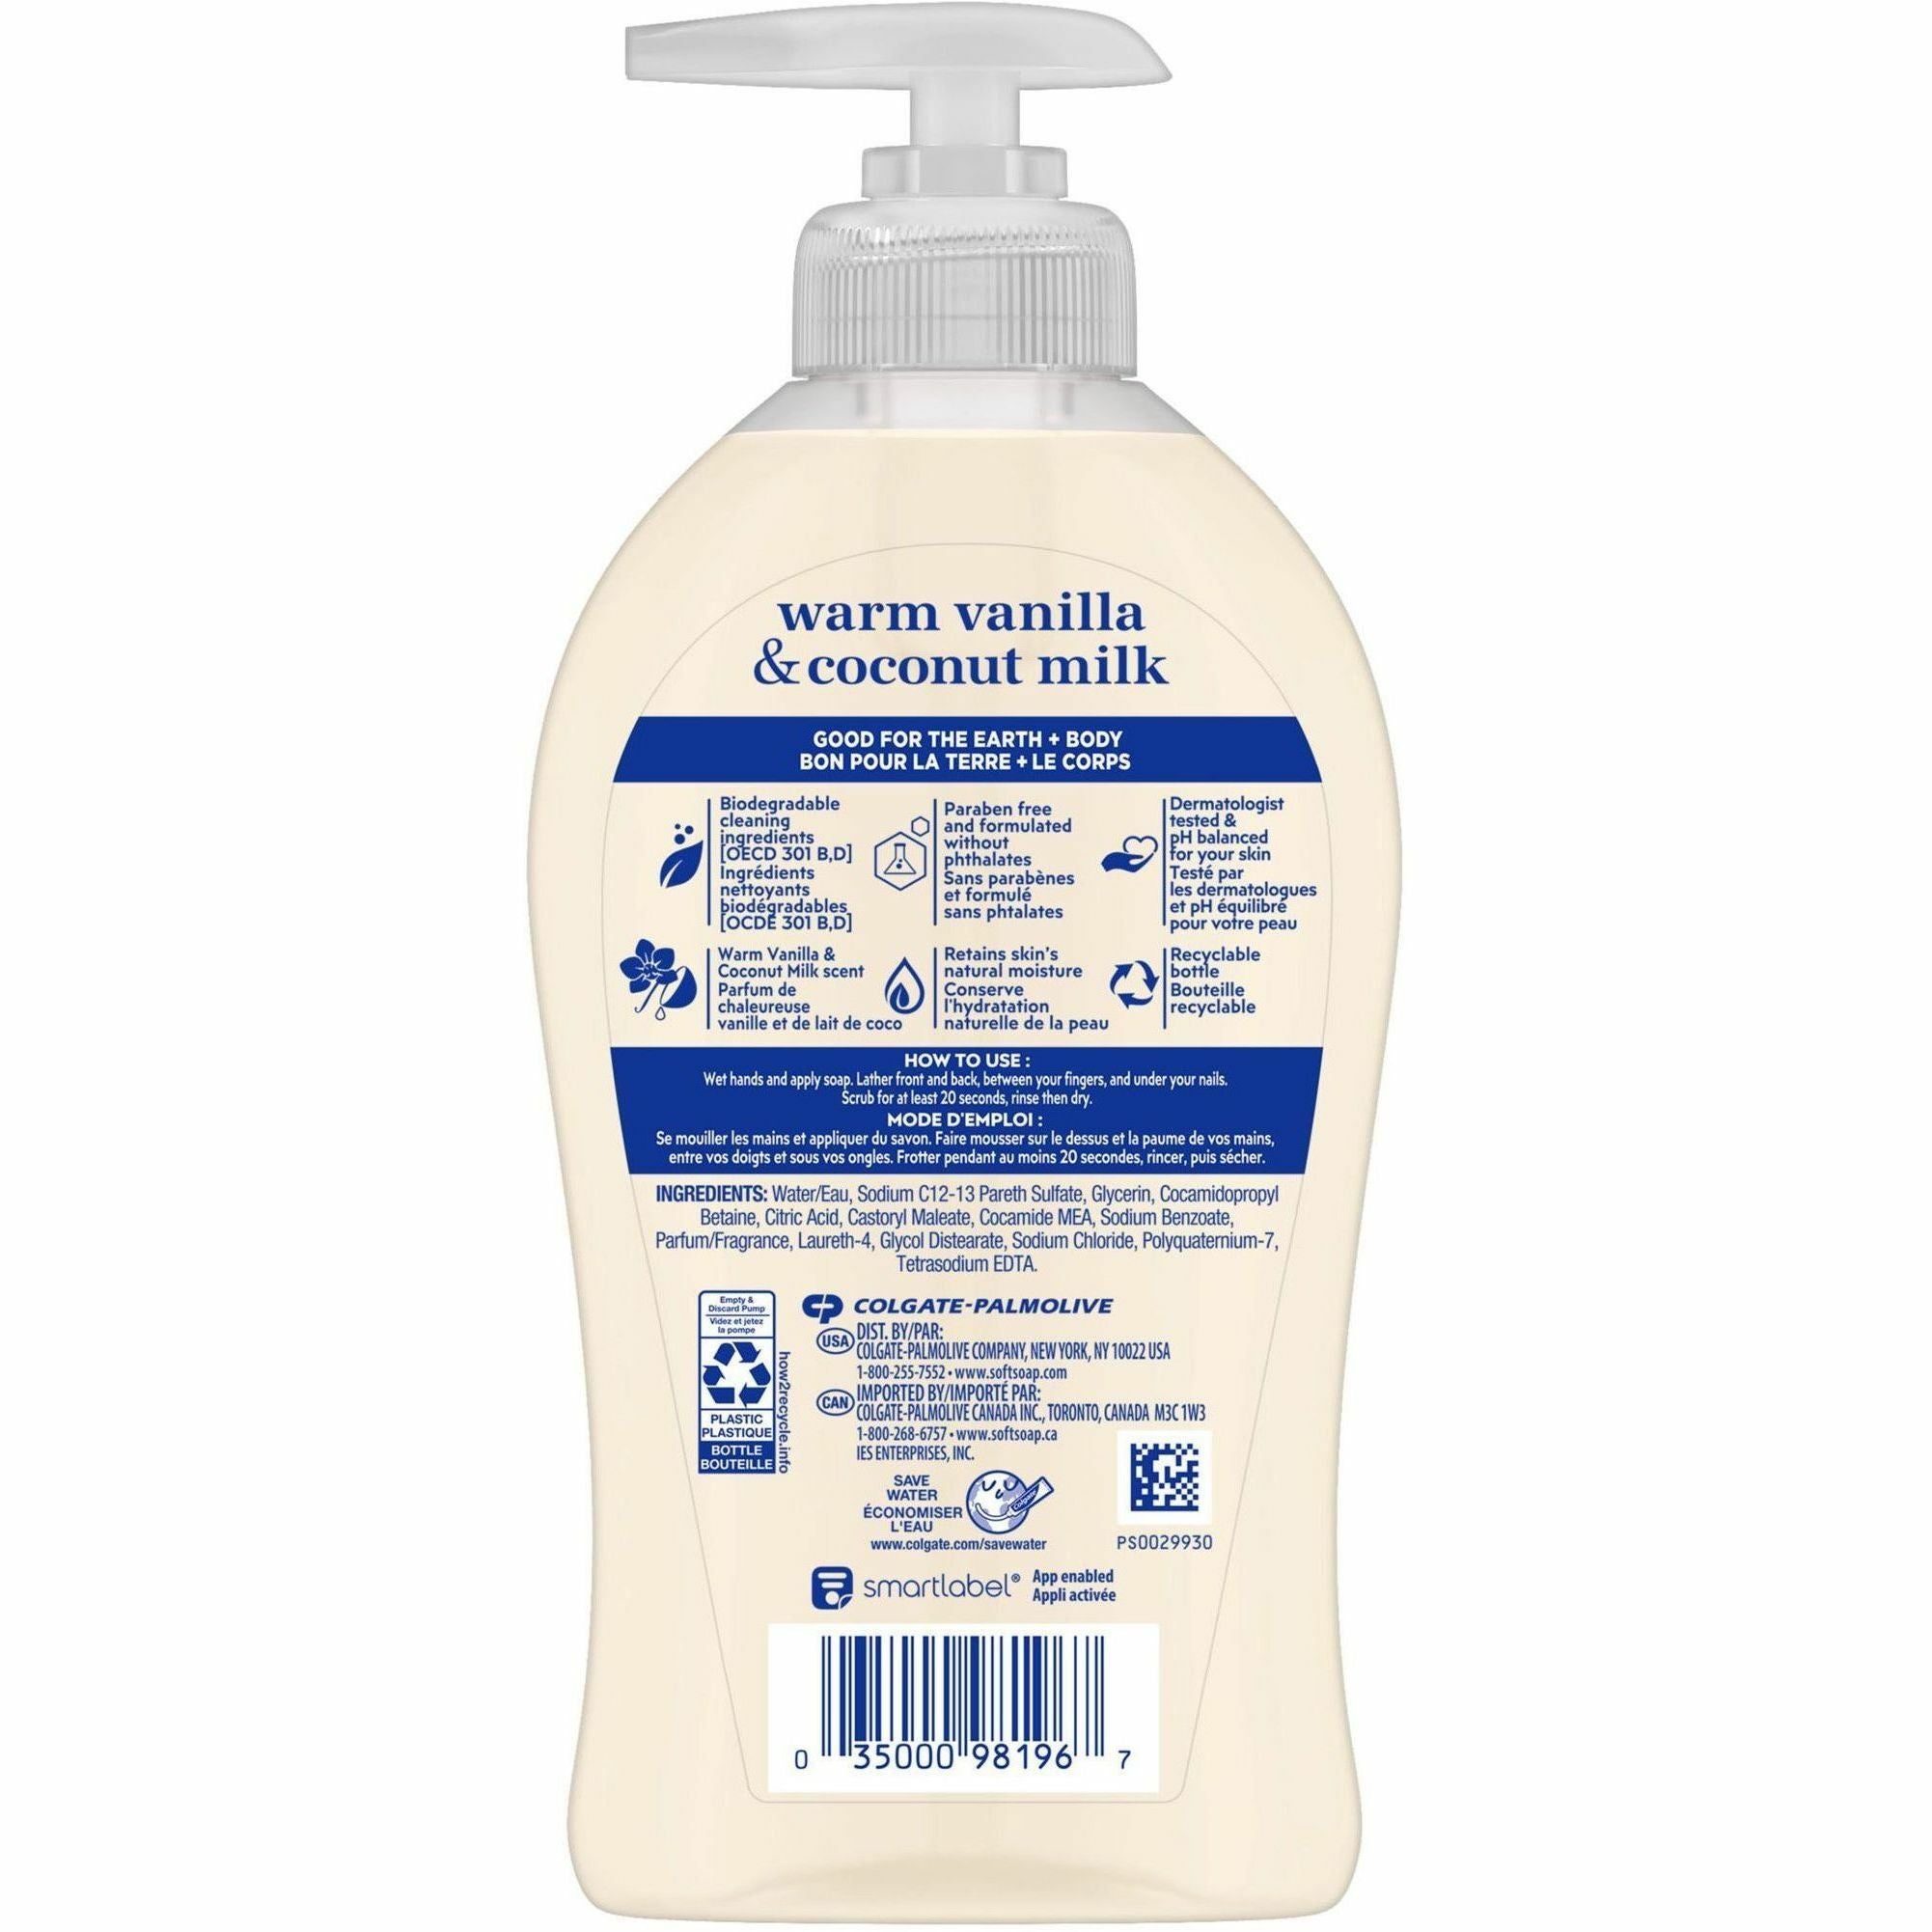 softsoap-warm-vanilla-hand-soap-warm-vanilla-&-coconut-milk-scentfor-113-fl-oz-3327-ml-pump-bottle-dispenser-bacteria-remover-dirt-remover-hand-skin-moisturizing-white-refillable-recyclable-paraben-free-phthalate-free-biodeg_cpcus07059a - 3